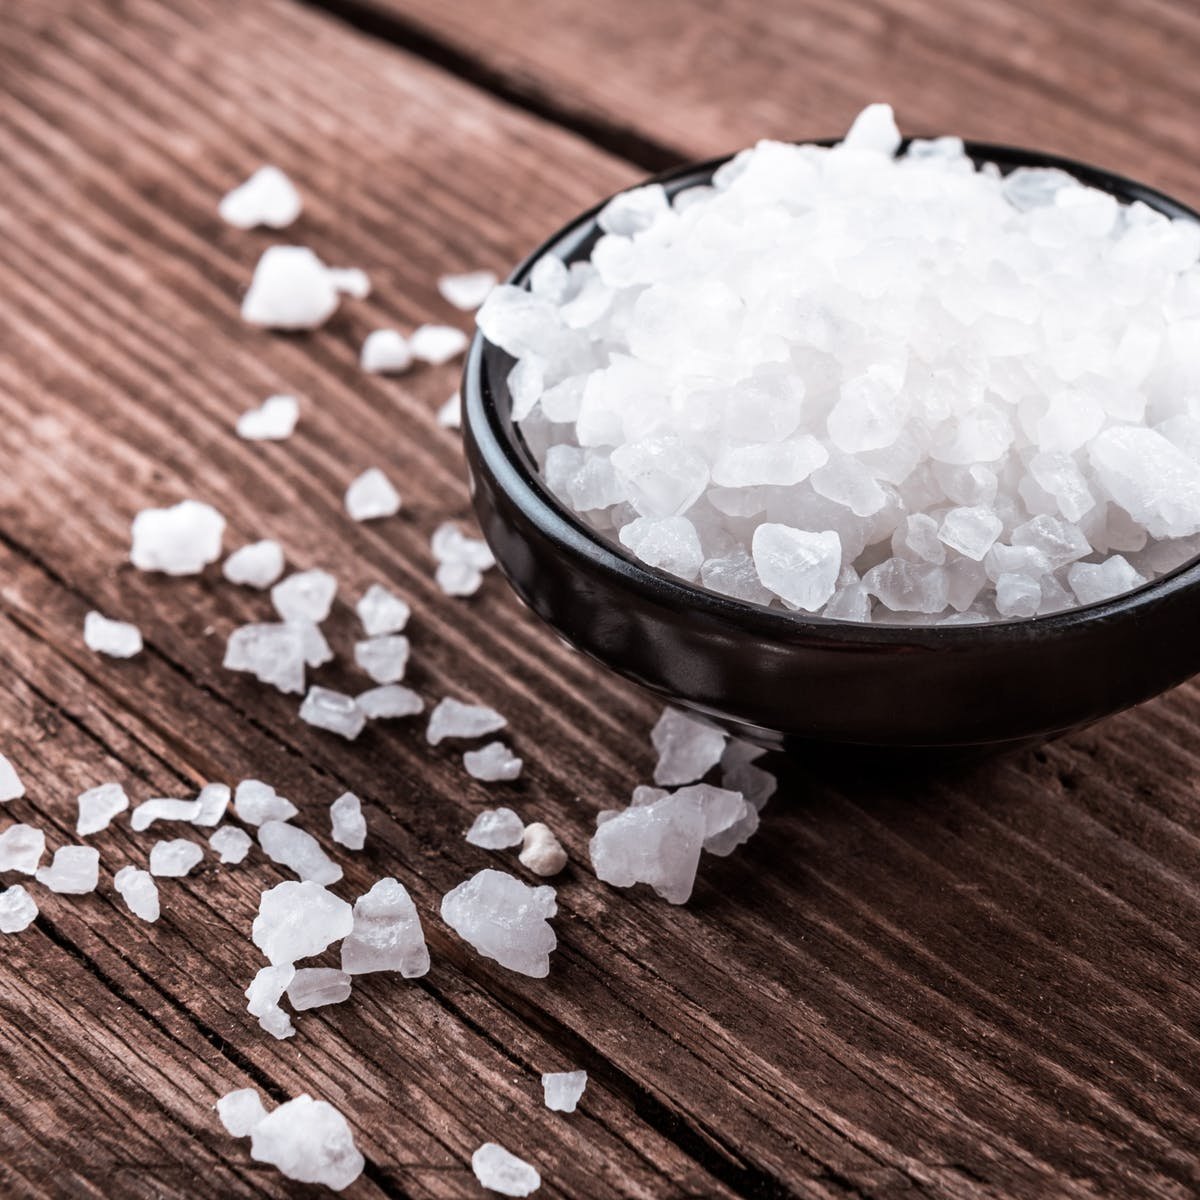 How To Store Rock Salt